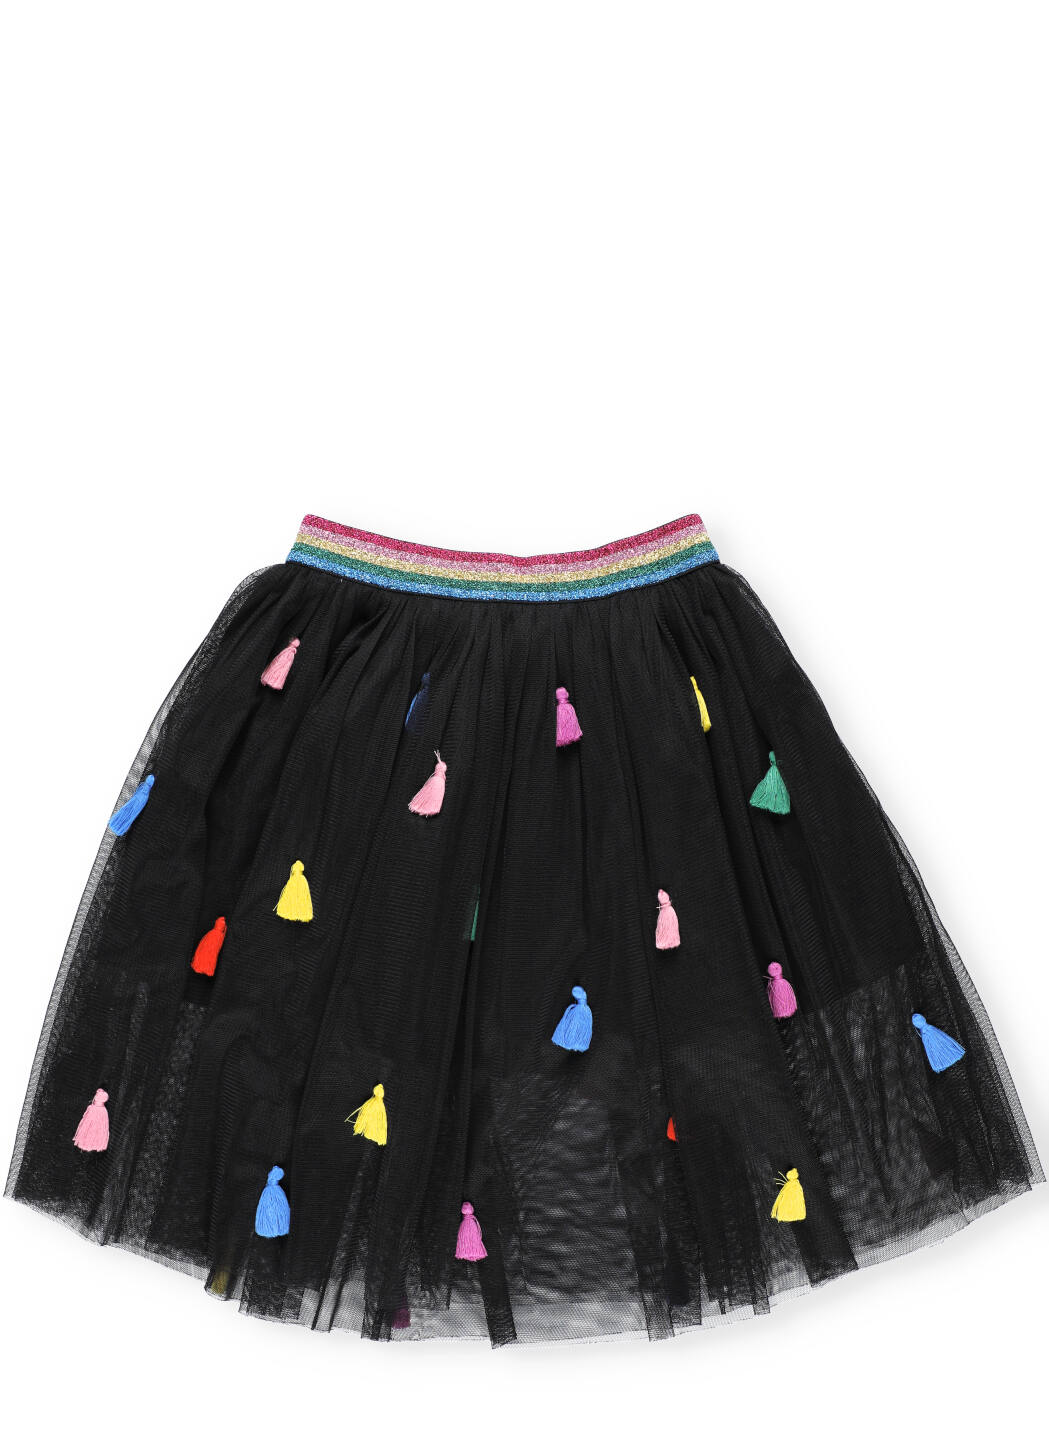 Stella McCartney Kids Tulle Skirt With Tassels